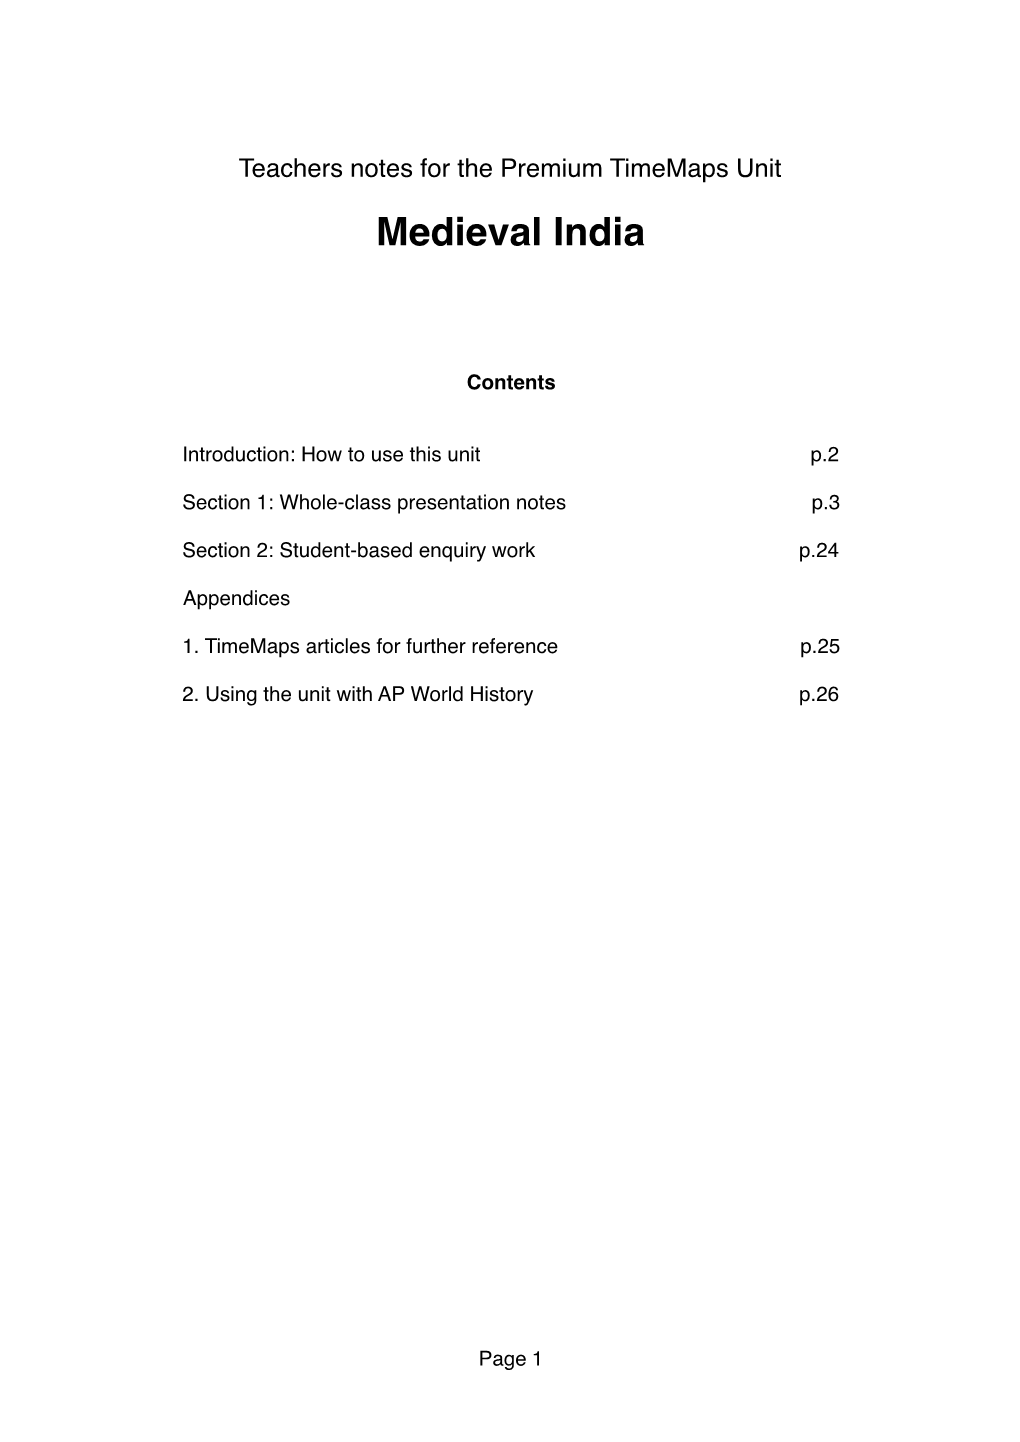 Teachers Notes for the Premium Timemaps Unit Medieval India